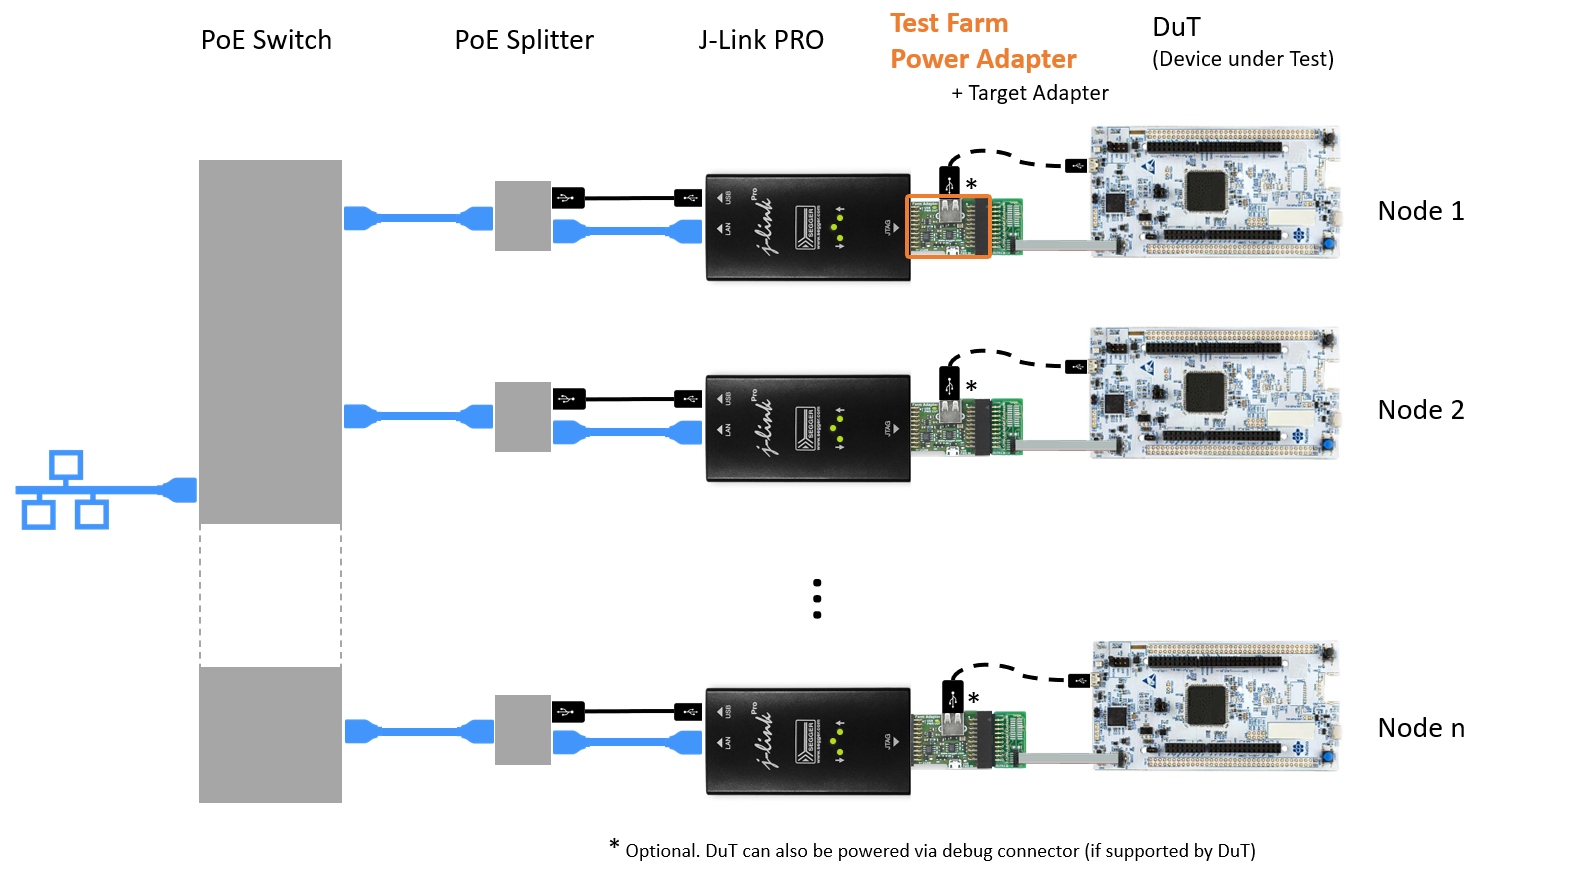 Test farm example using SEGGER J-Link PRO debug probe and the SEGGER Test Farm Power Adapter